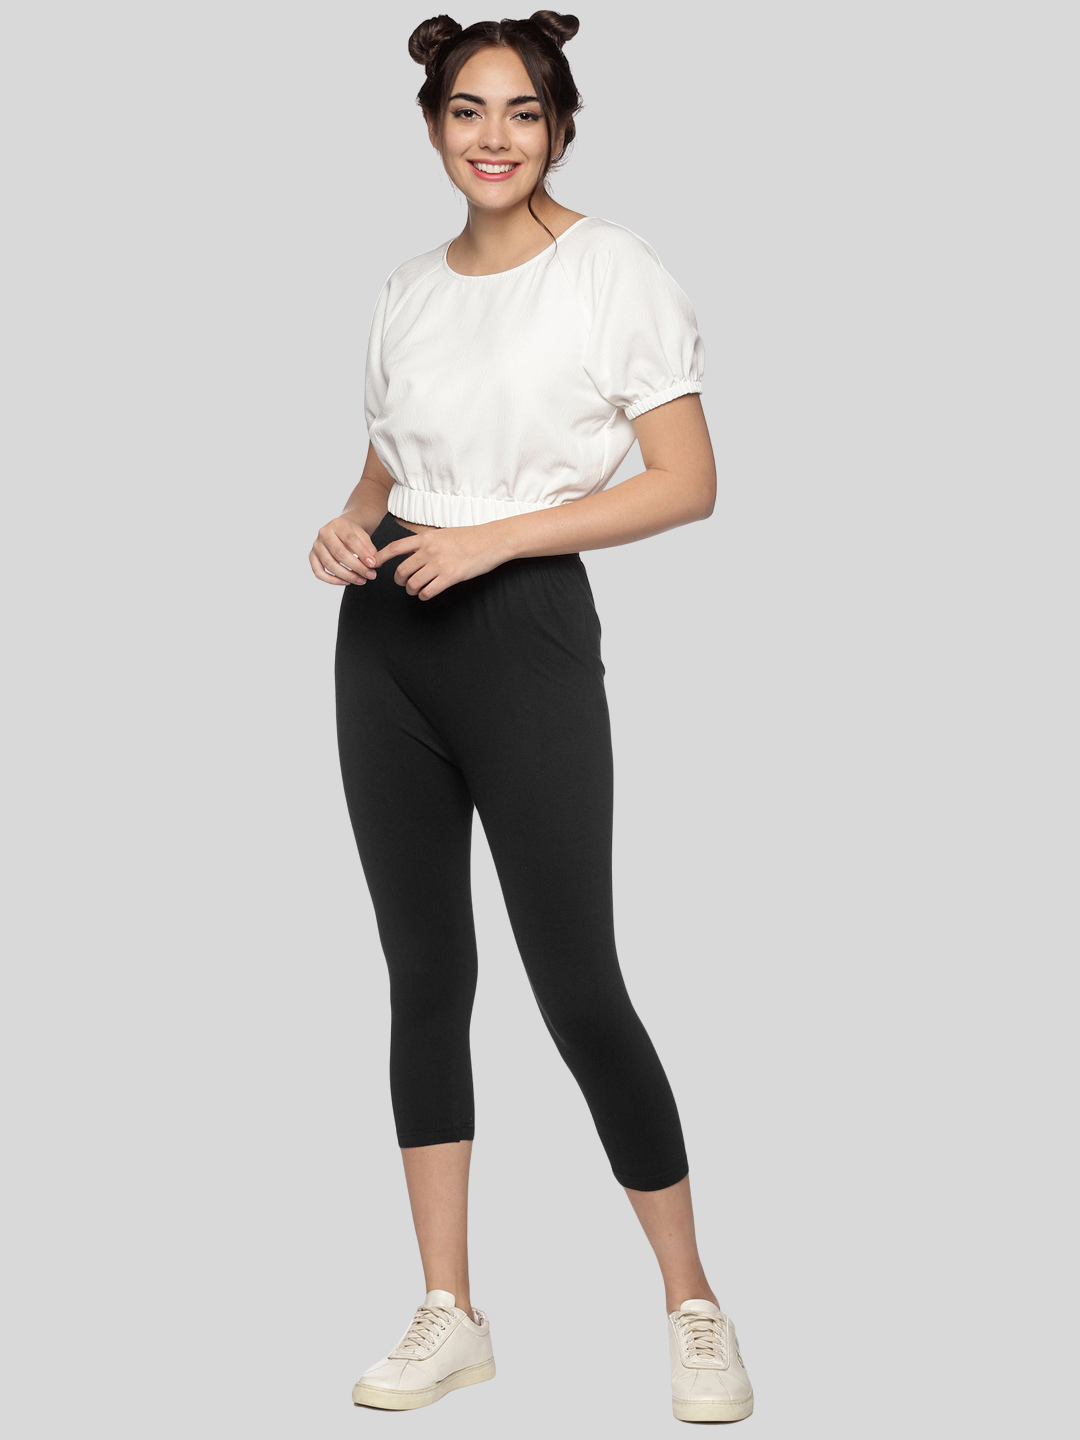 Buy Wear Jukebox Flow Fit Adapt Crop Top & Tights for Women White (Set of  2) Online